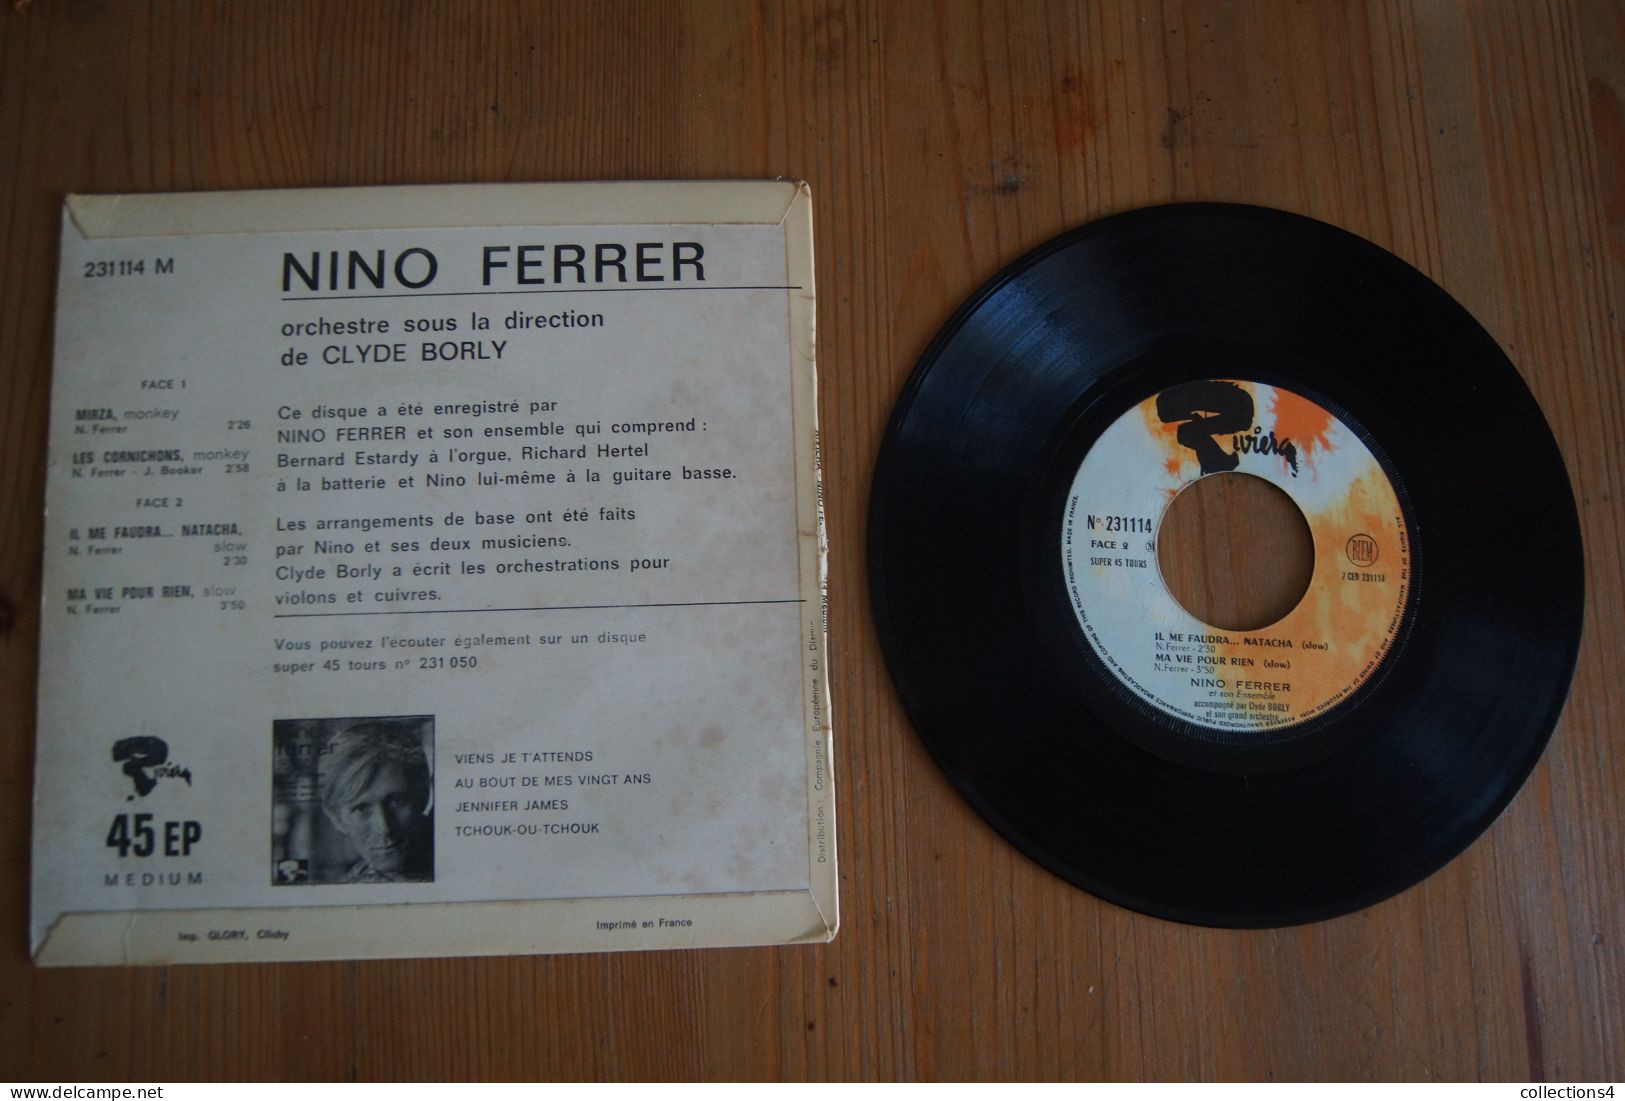 NINO FERRER Z AVEZ PAS VU MIRZA EP 1965 LANGUETTE - 45 Toeren - Maxi-Single